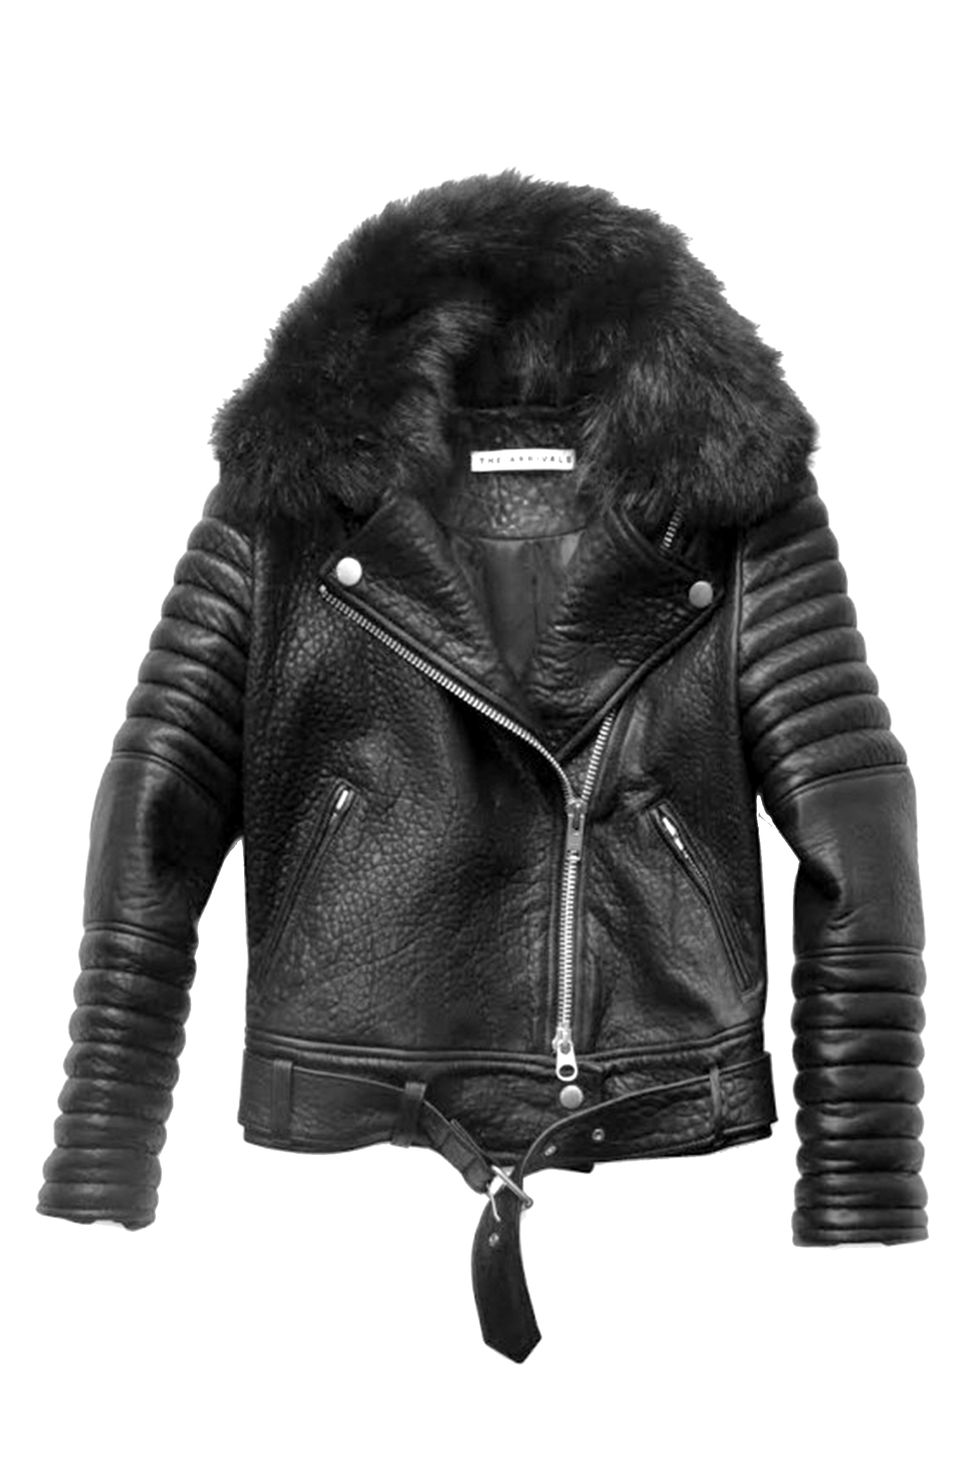 elle-splurgethe-arrivals-leather-jacket-760x760